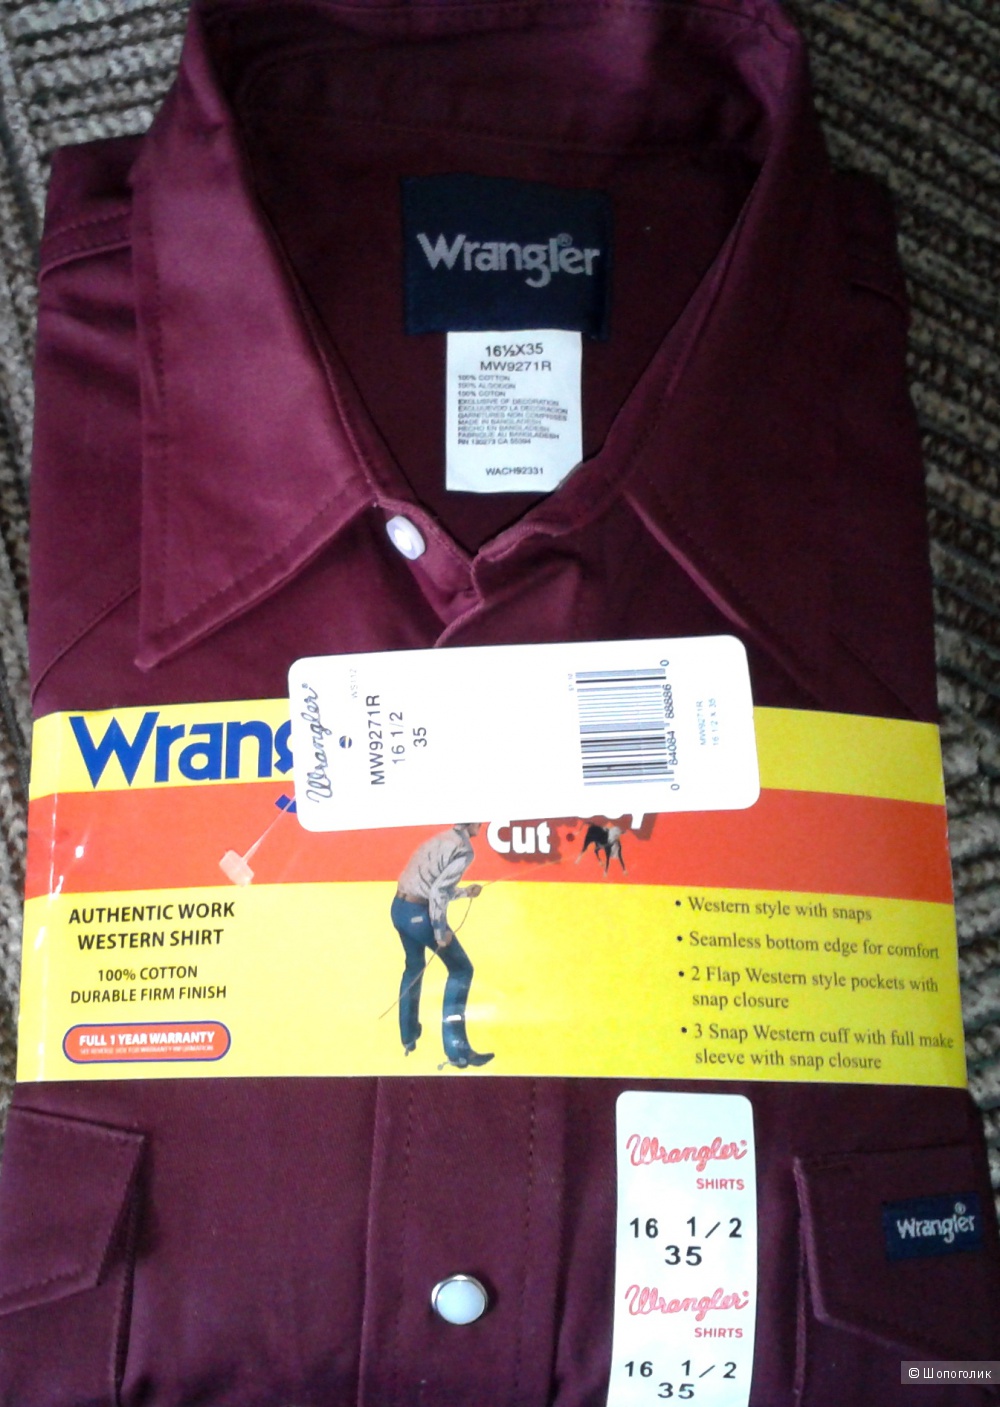 Мужская  рубашка Wrangler MW9271R - Red Oxide   16,5х35